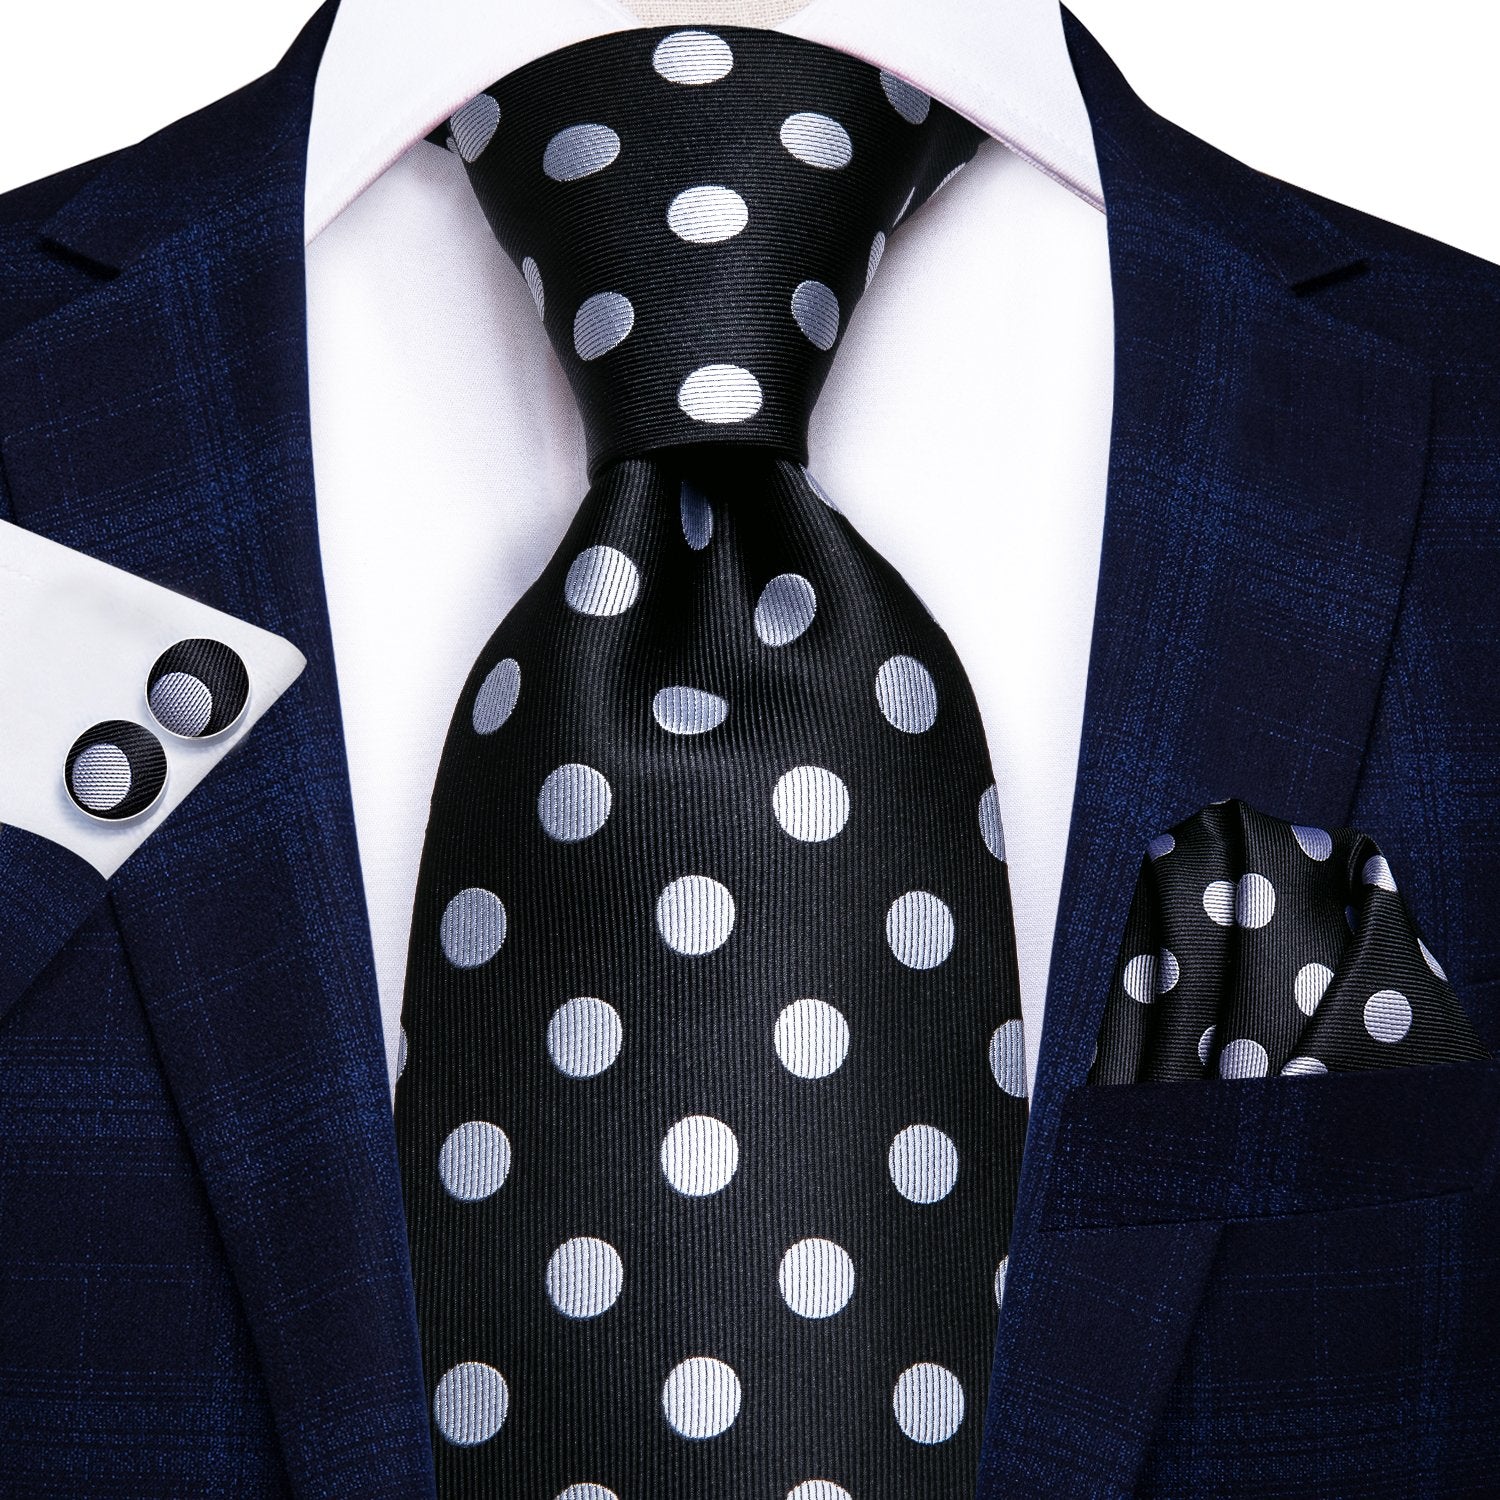 Classic Black White Polka Dot Tie Handkerchief Cufflinks Set with Wedding Brooch